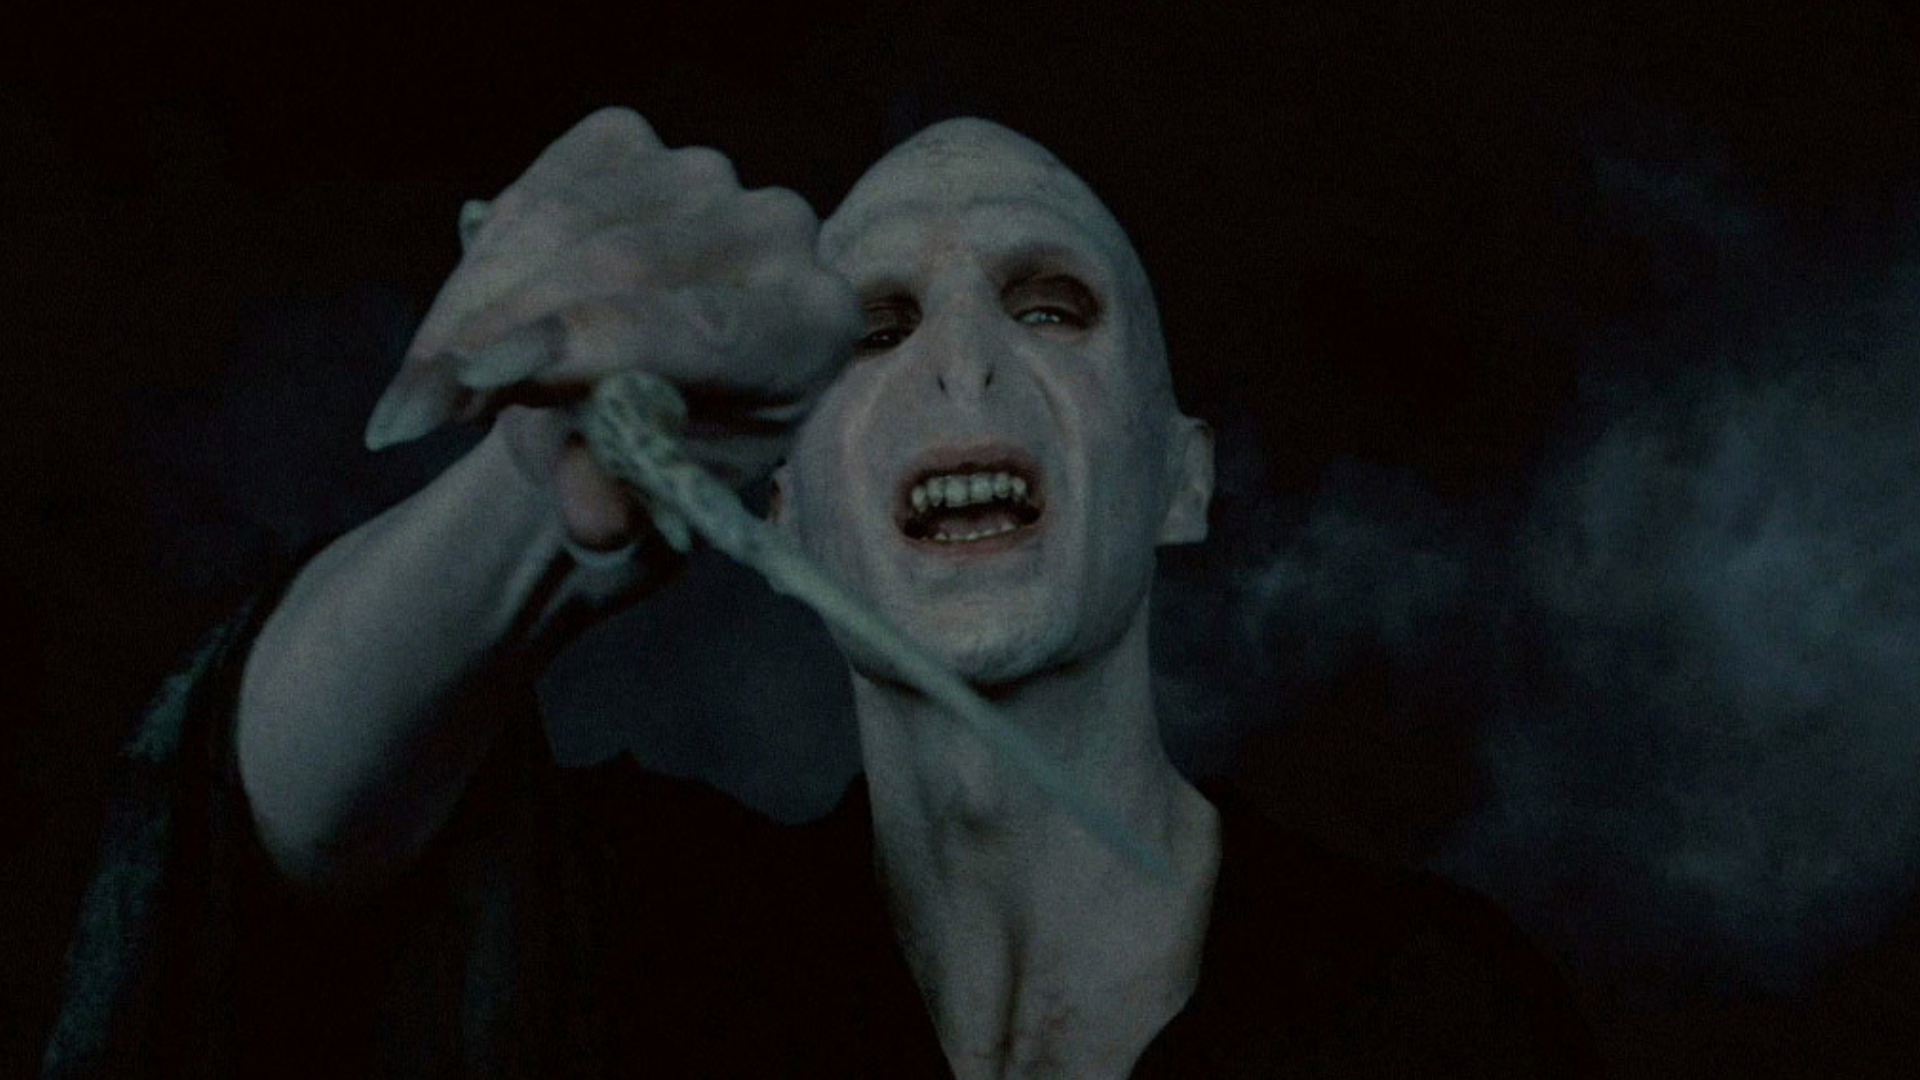 Voldemort zo ságy o Harrym Potterovi